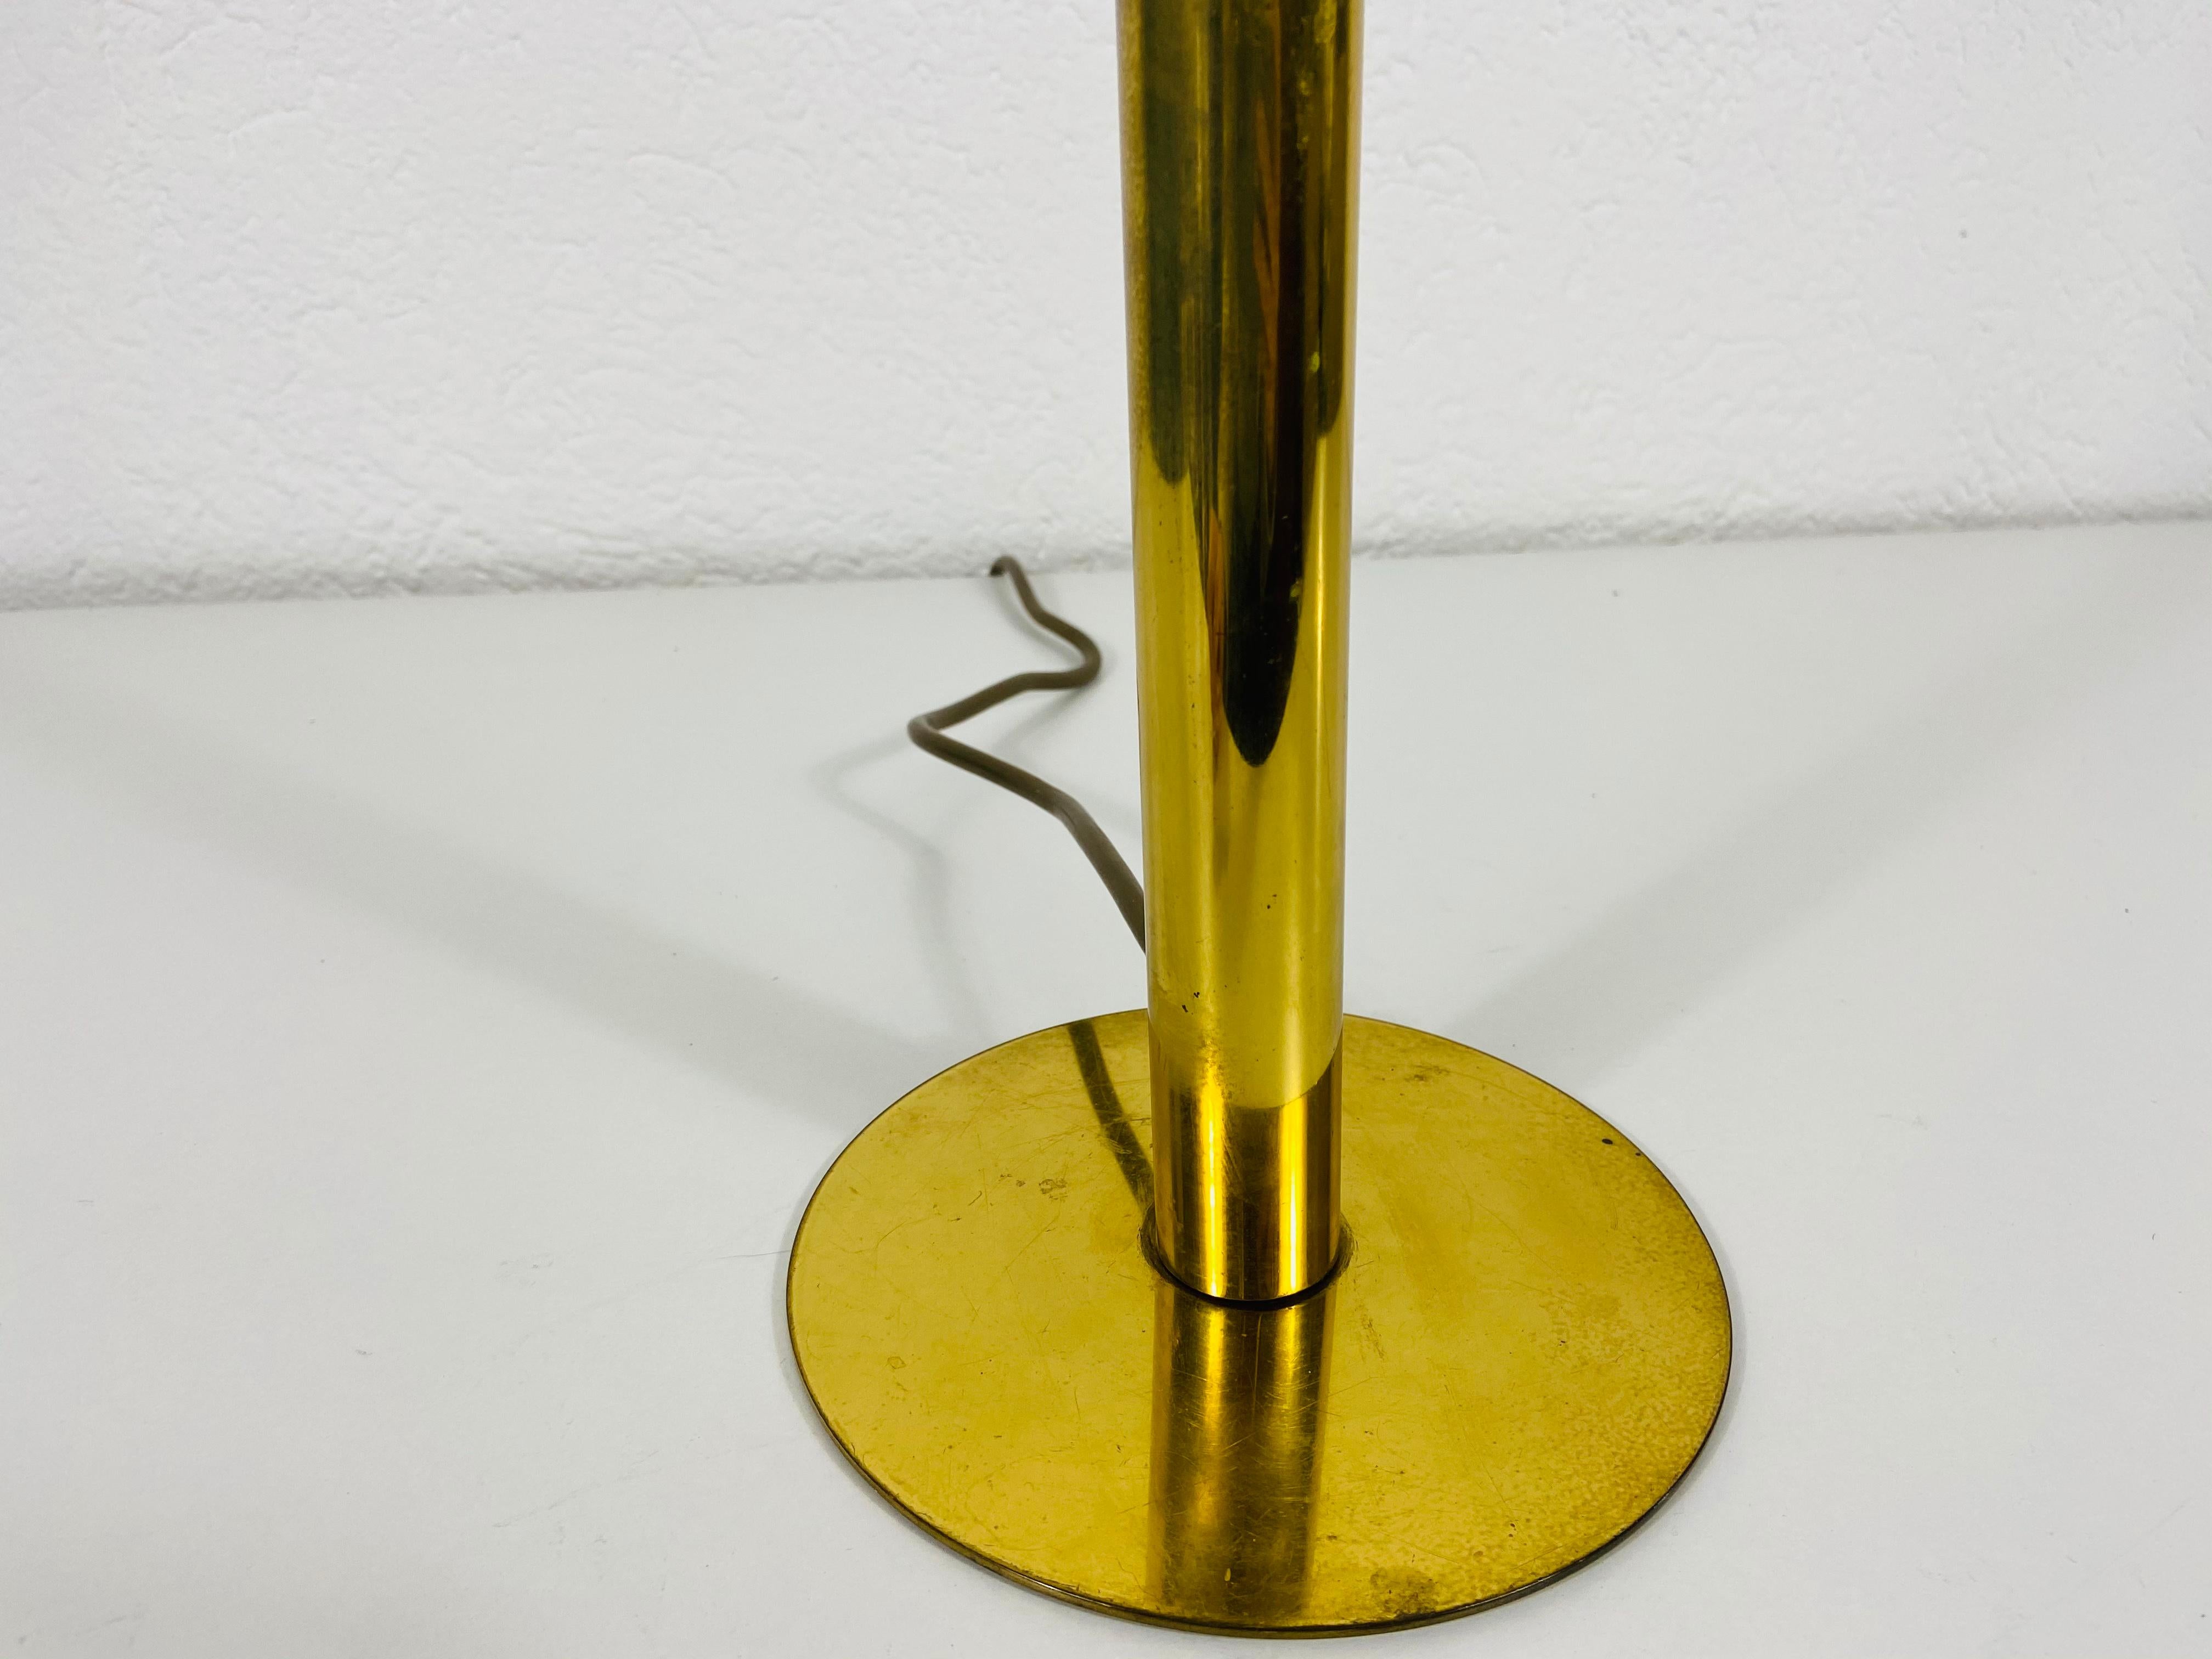 German Midcentury Solid Brass Table Lamp by Vereinigte Werkstätte, 1960s For Sale 1